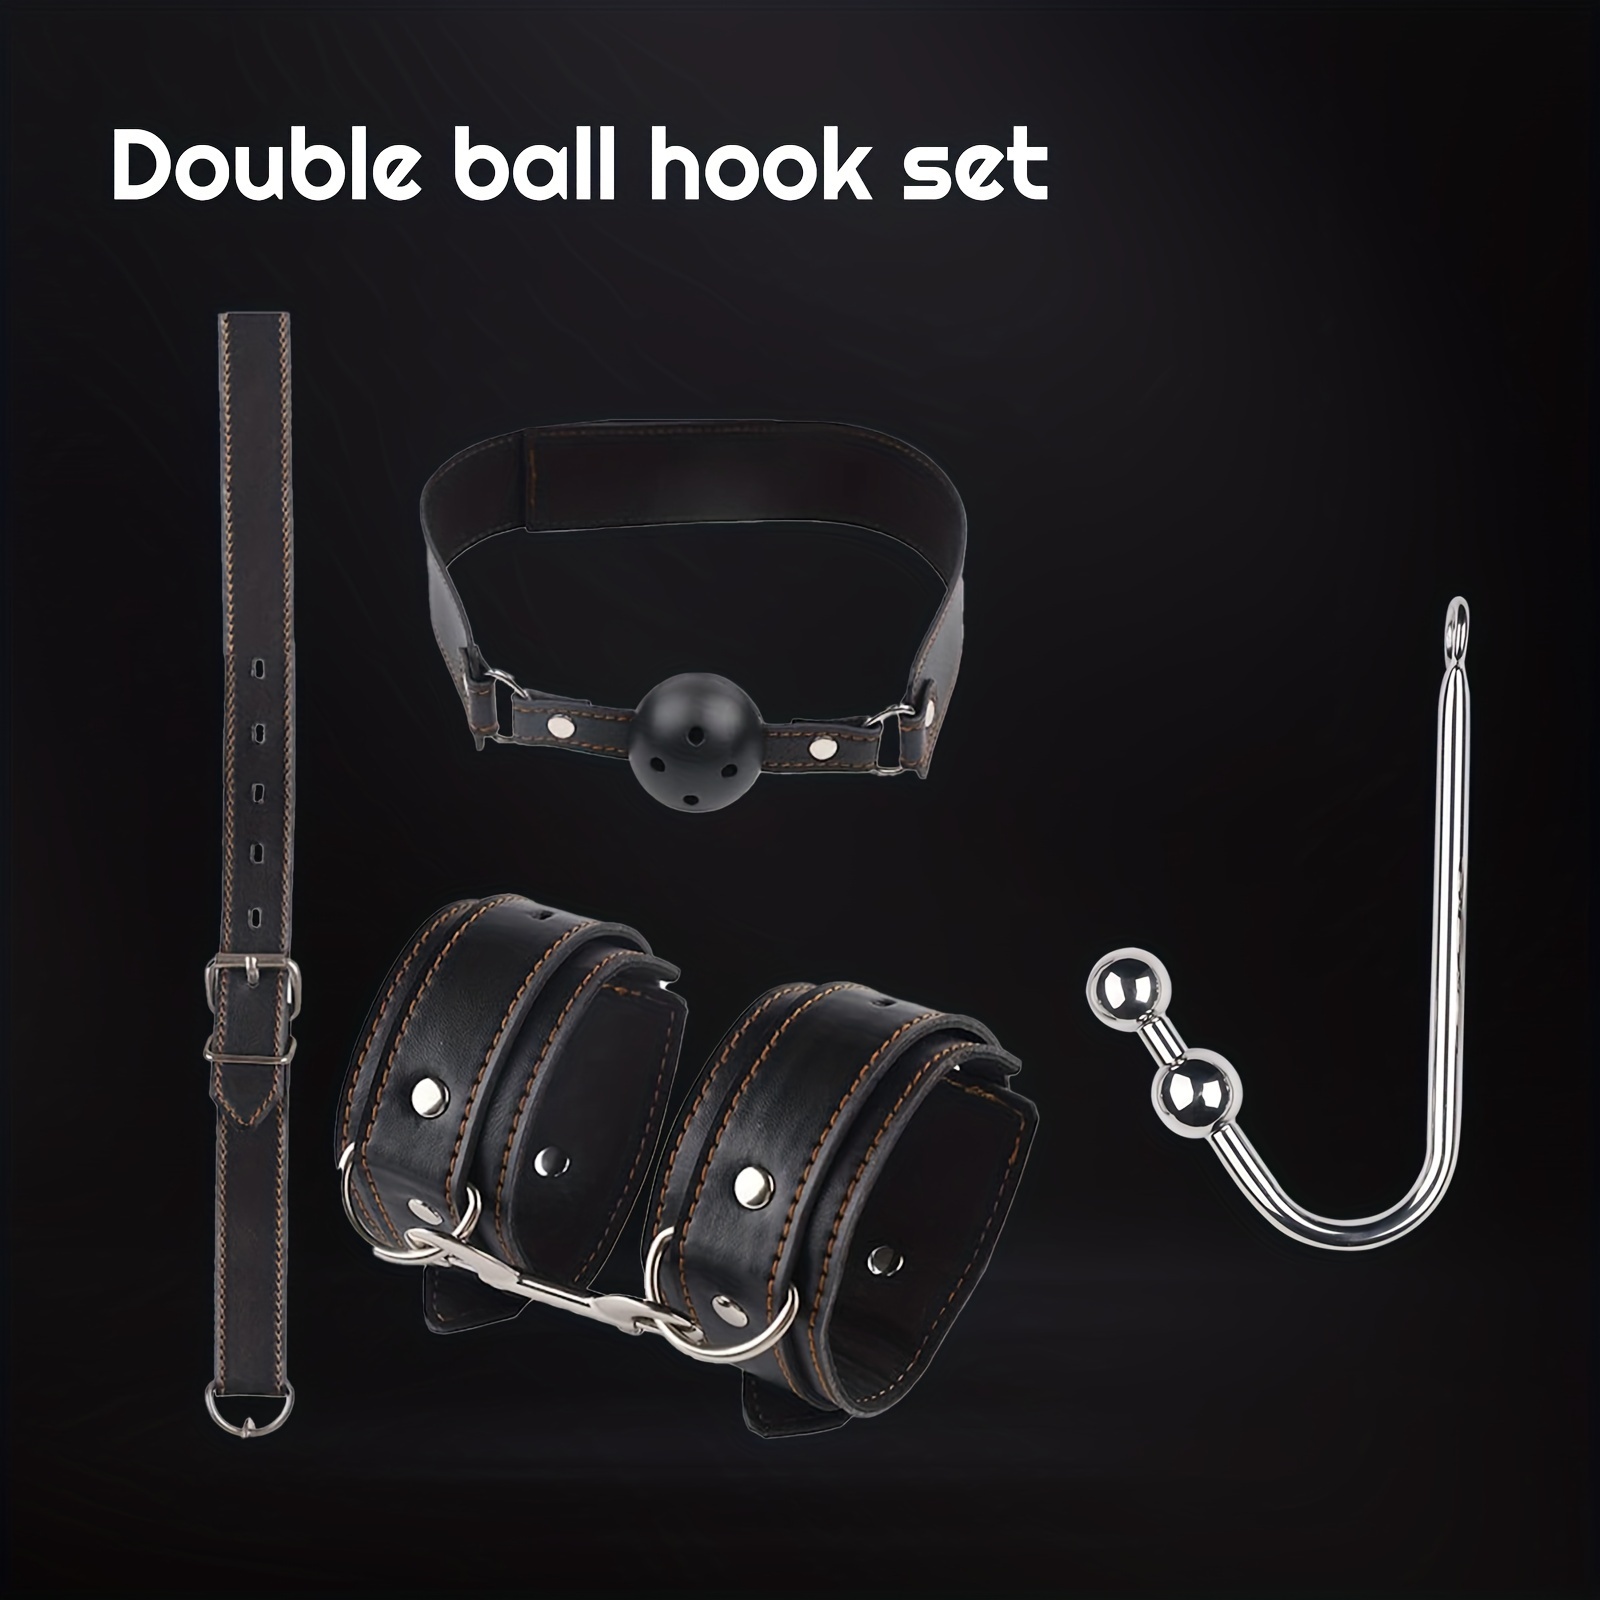 BDSM Kit with Anal Hook Bondage Restraints SM Sex Toy Comfortable